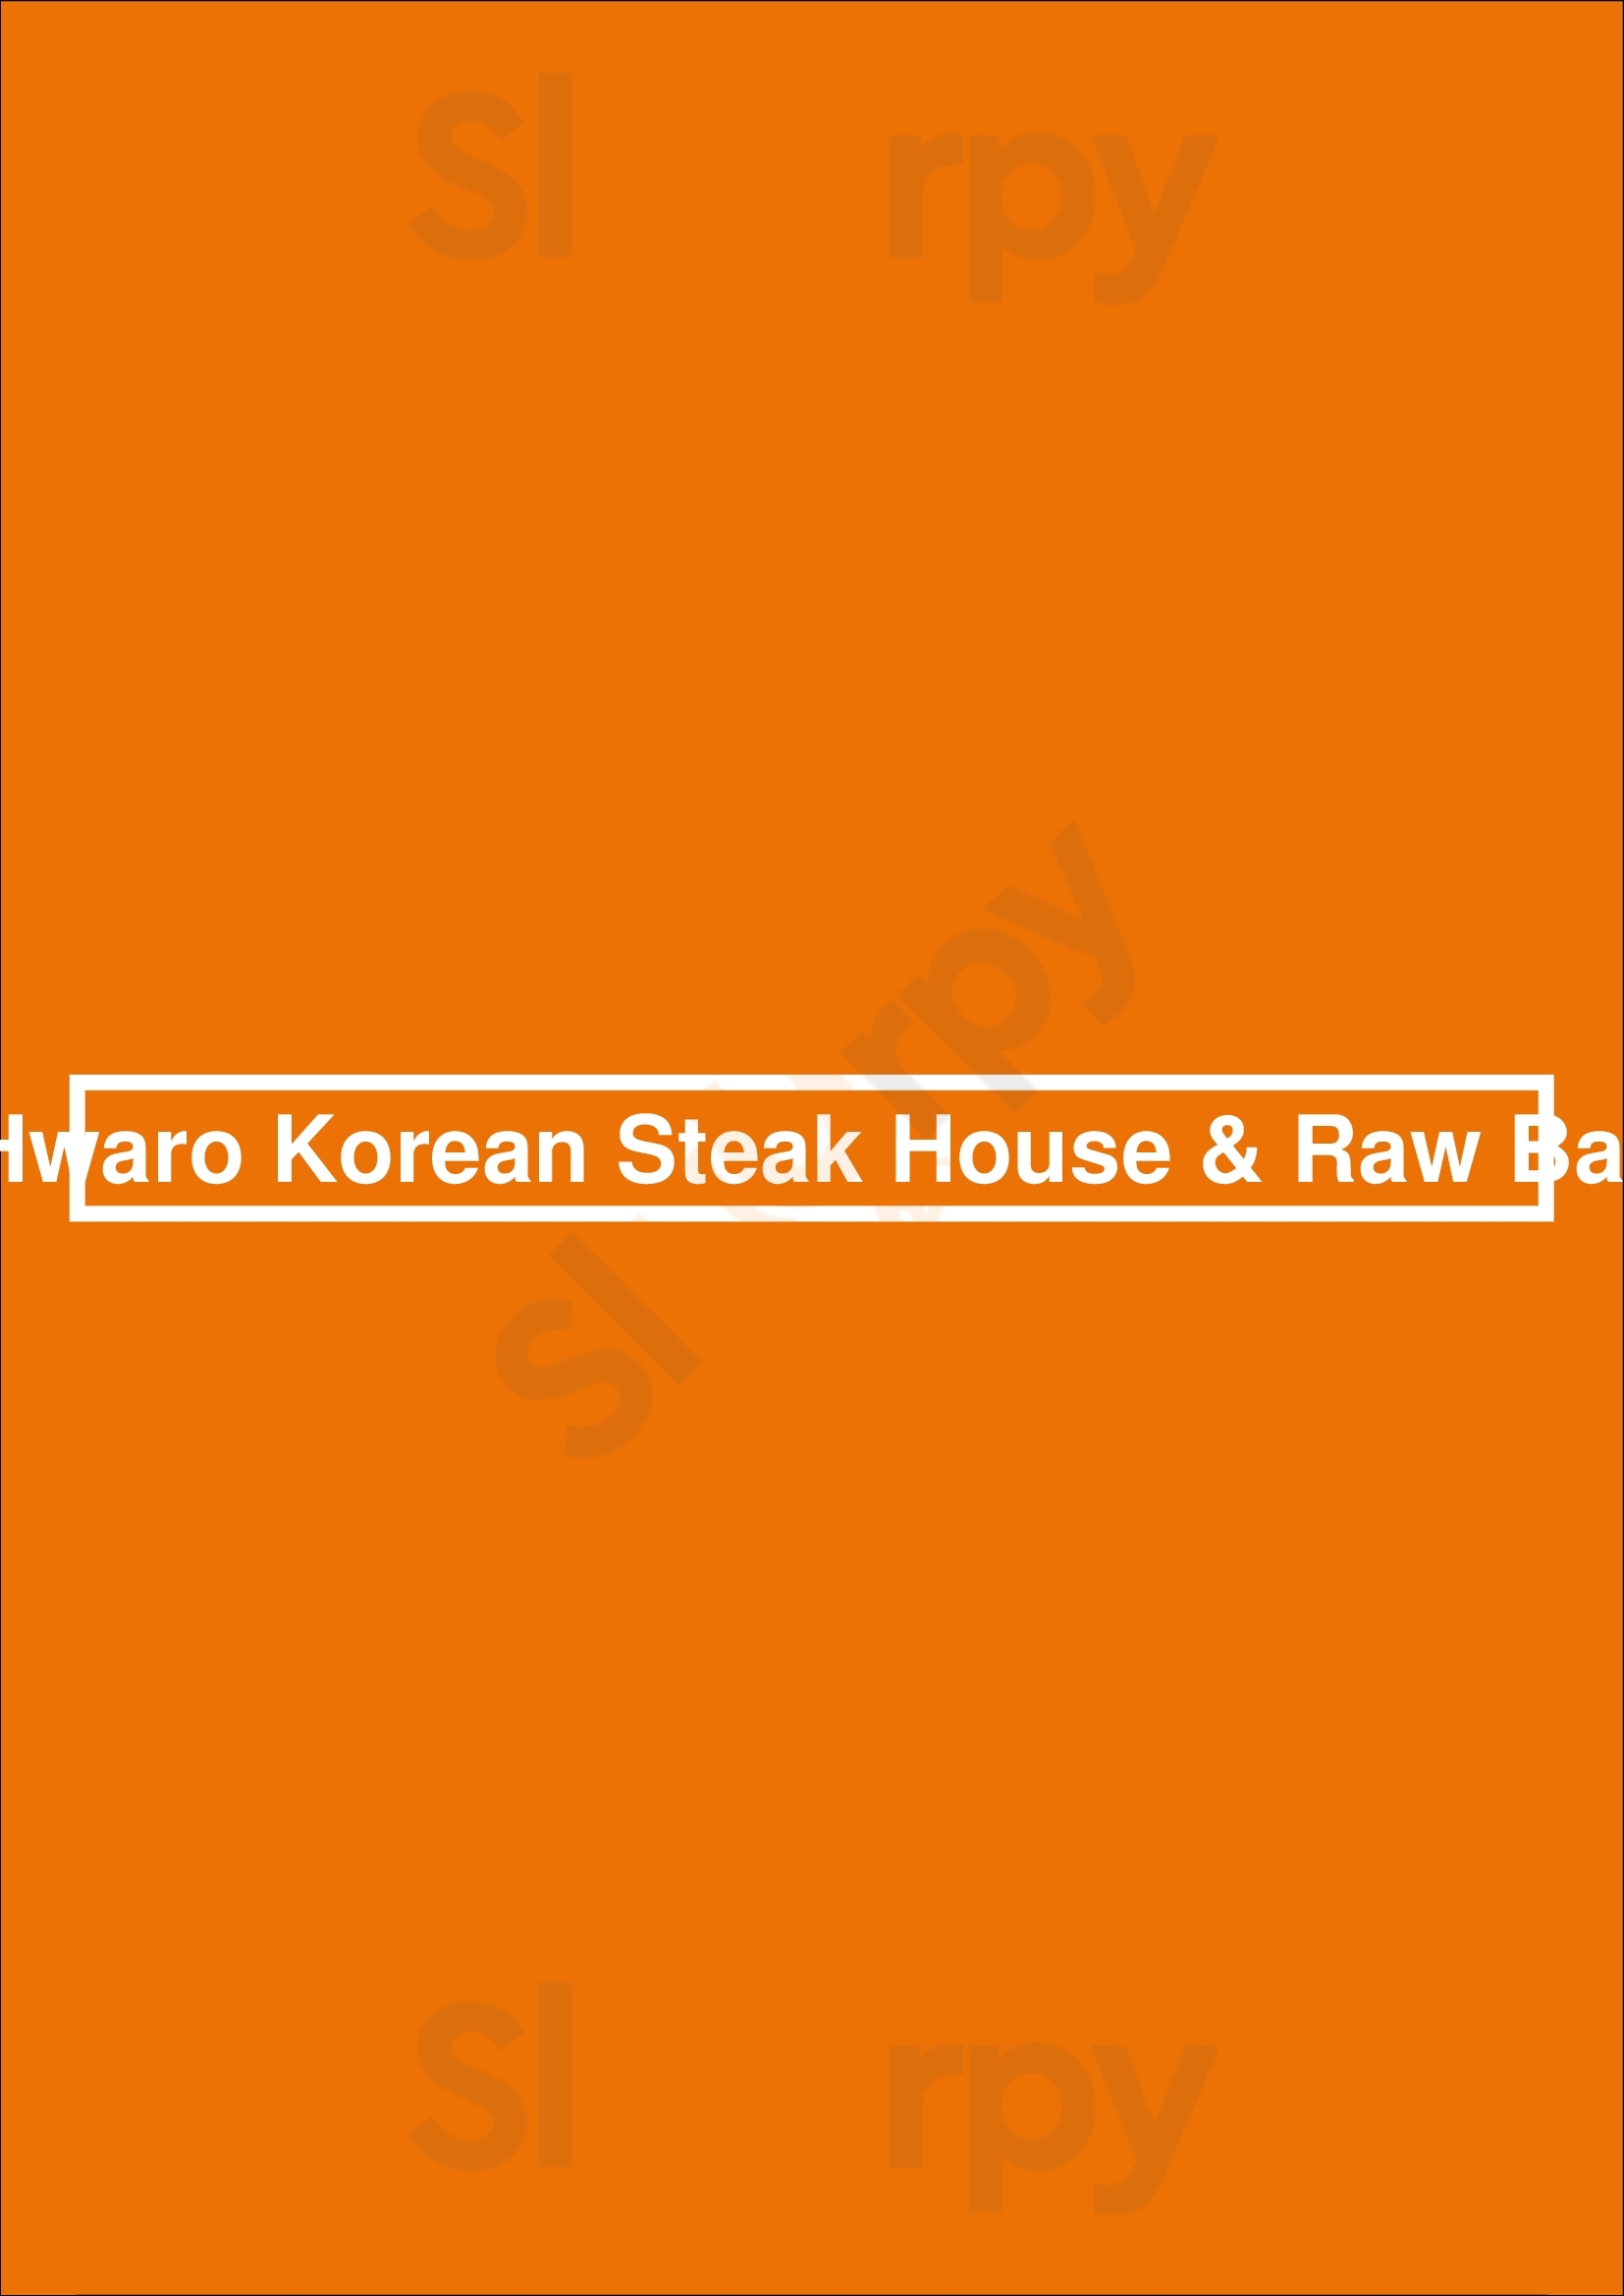 Hwaro Korean Steak House & Raw Bar Coquitlam Menu - 1